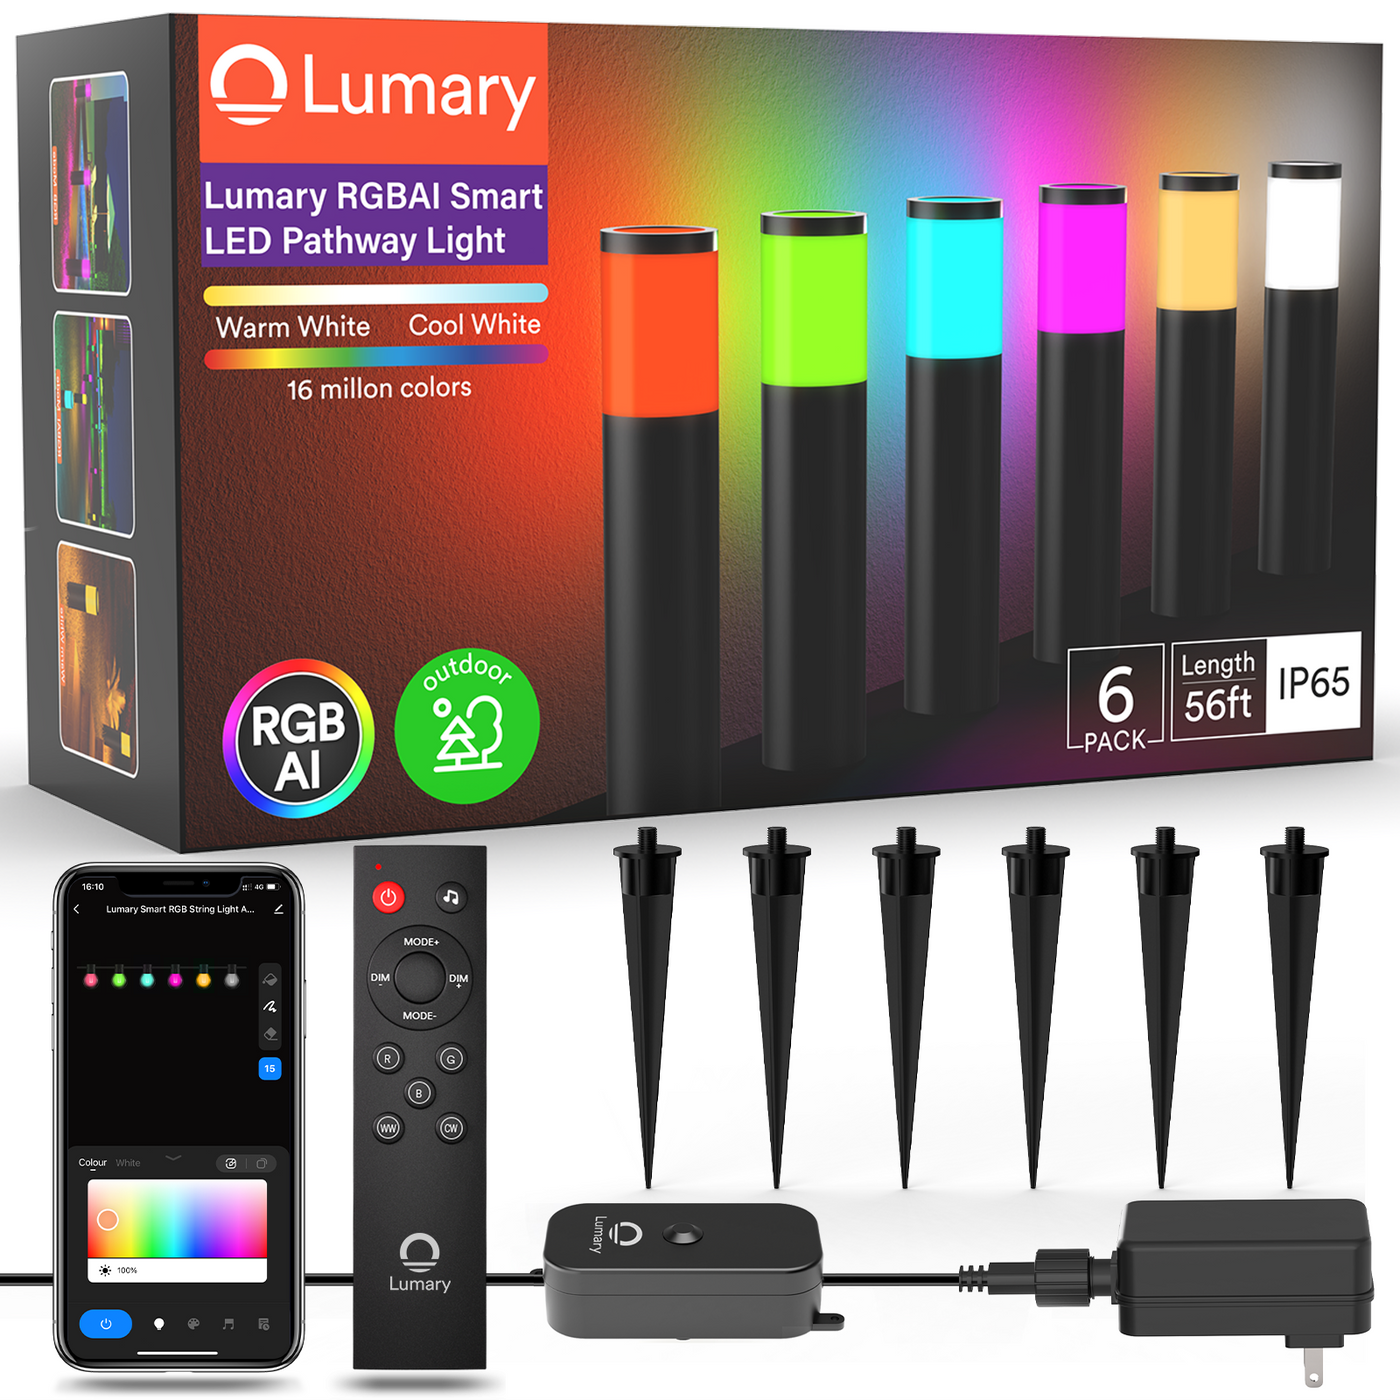 Lumary RGBAI Smart WiFi Pathway Lights 62ft (6 Pack)